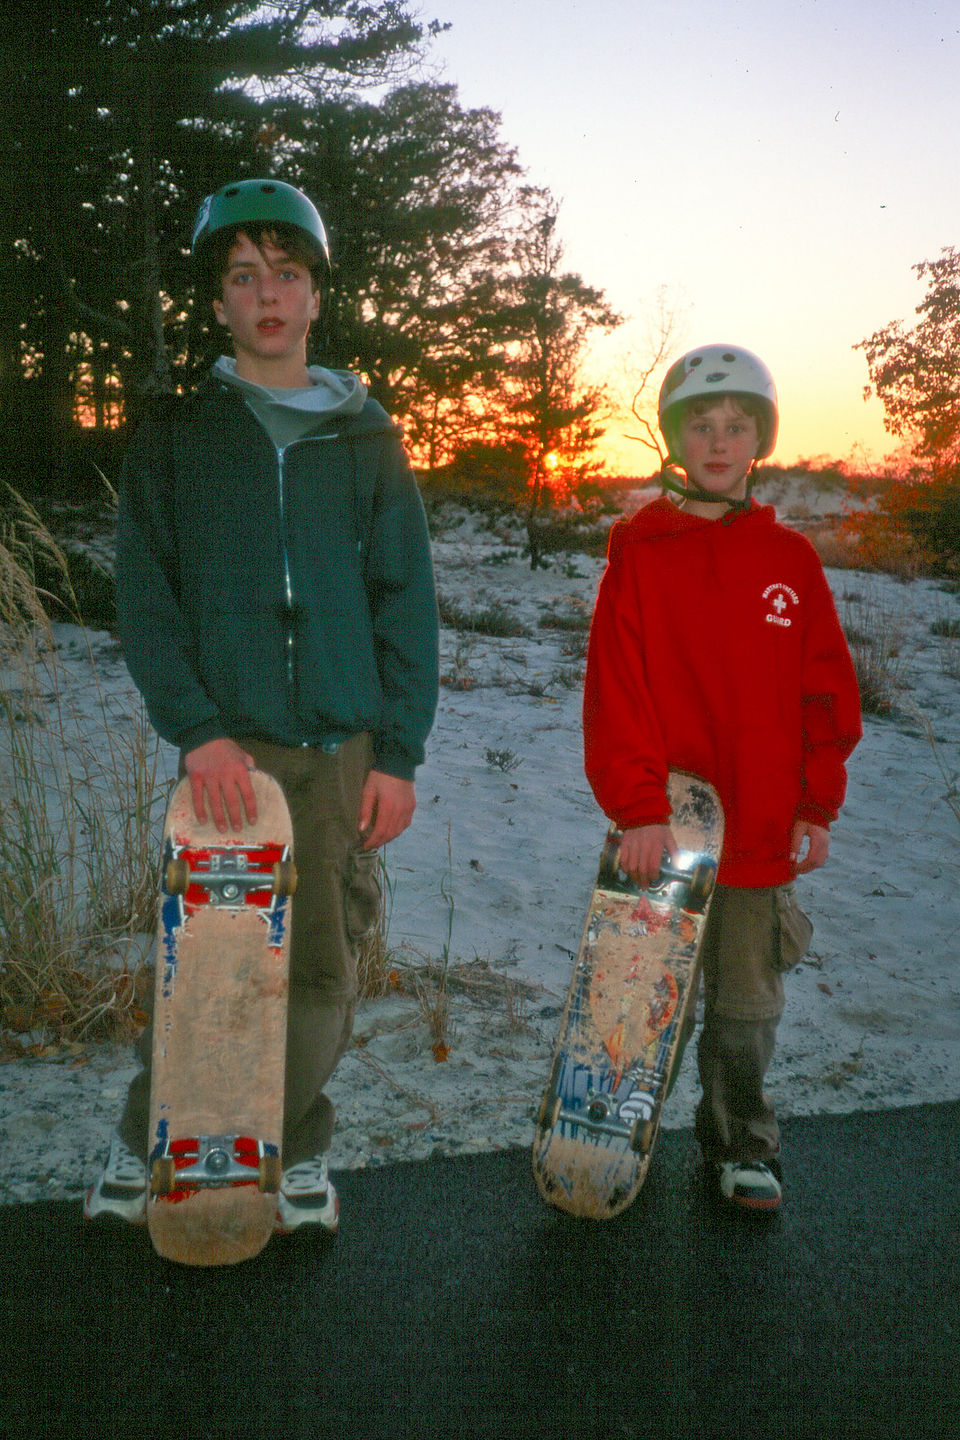 Boys post skate boarding